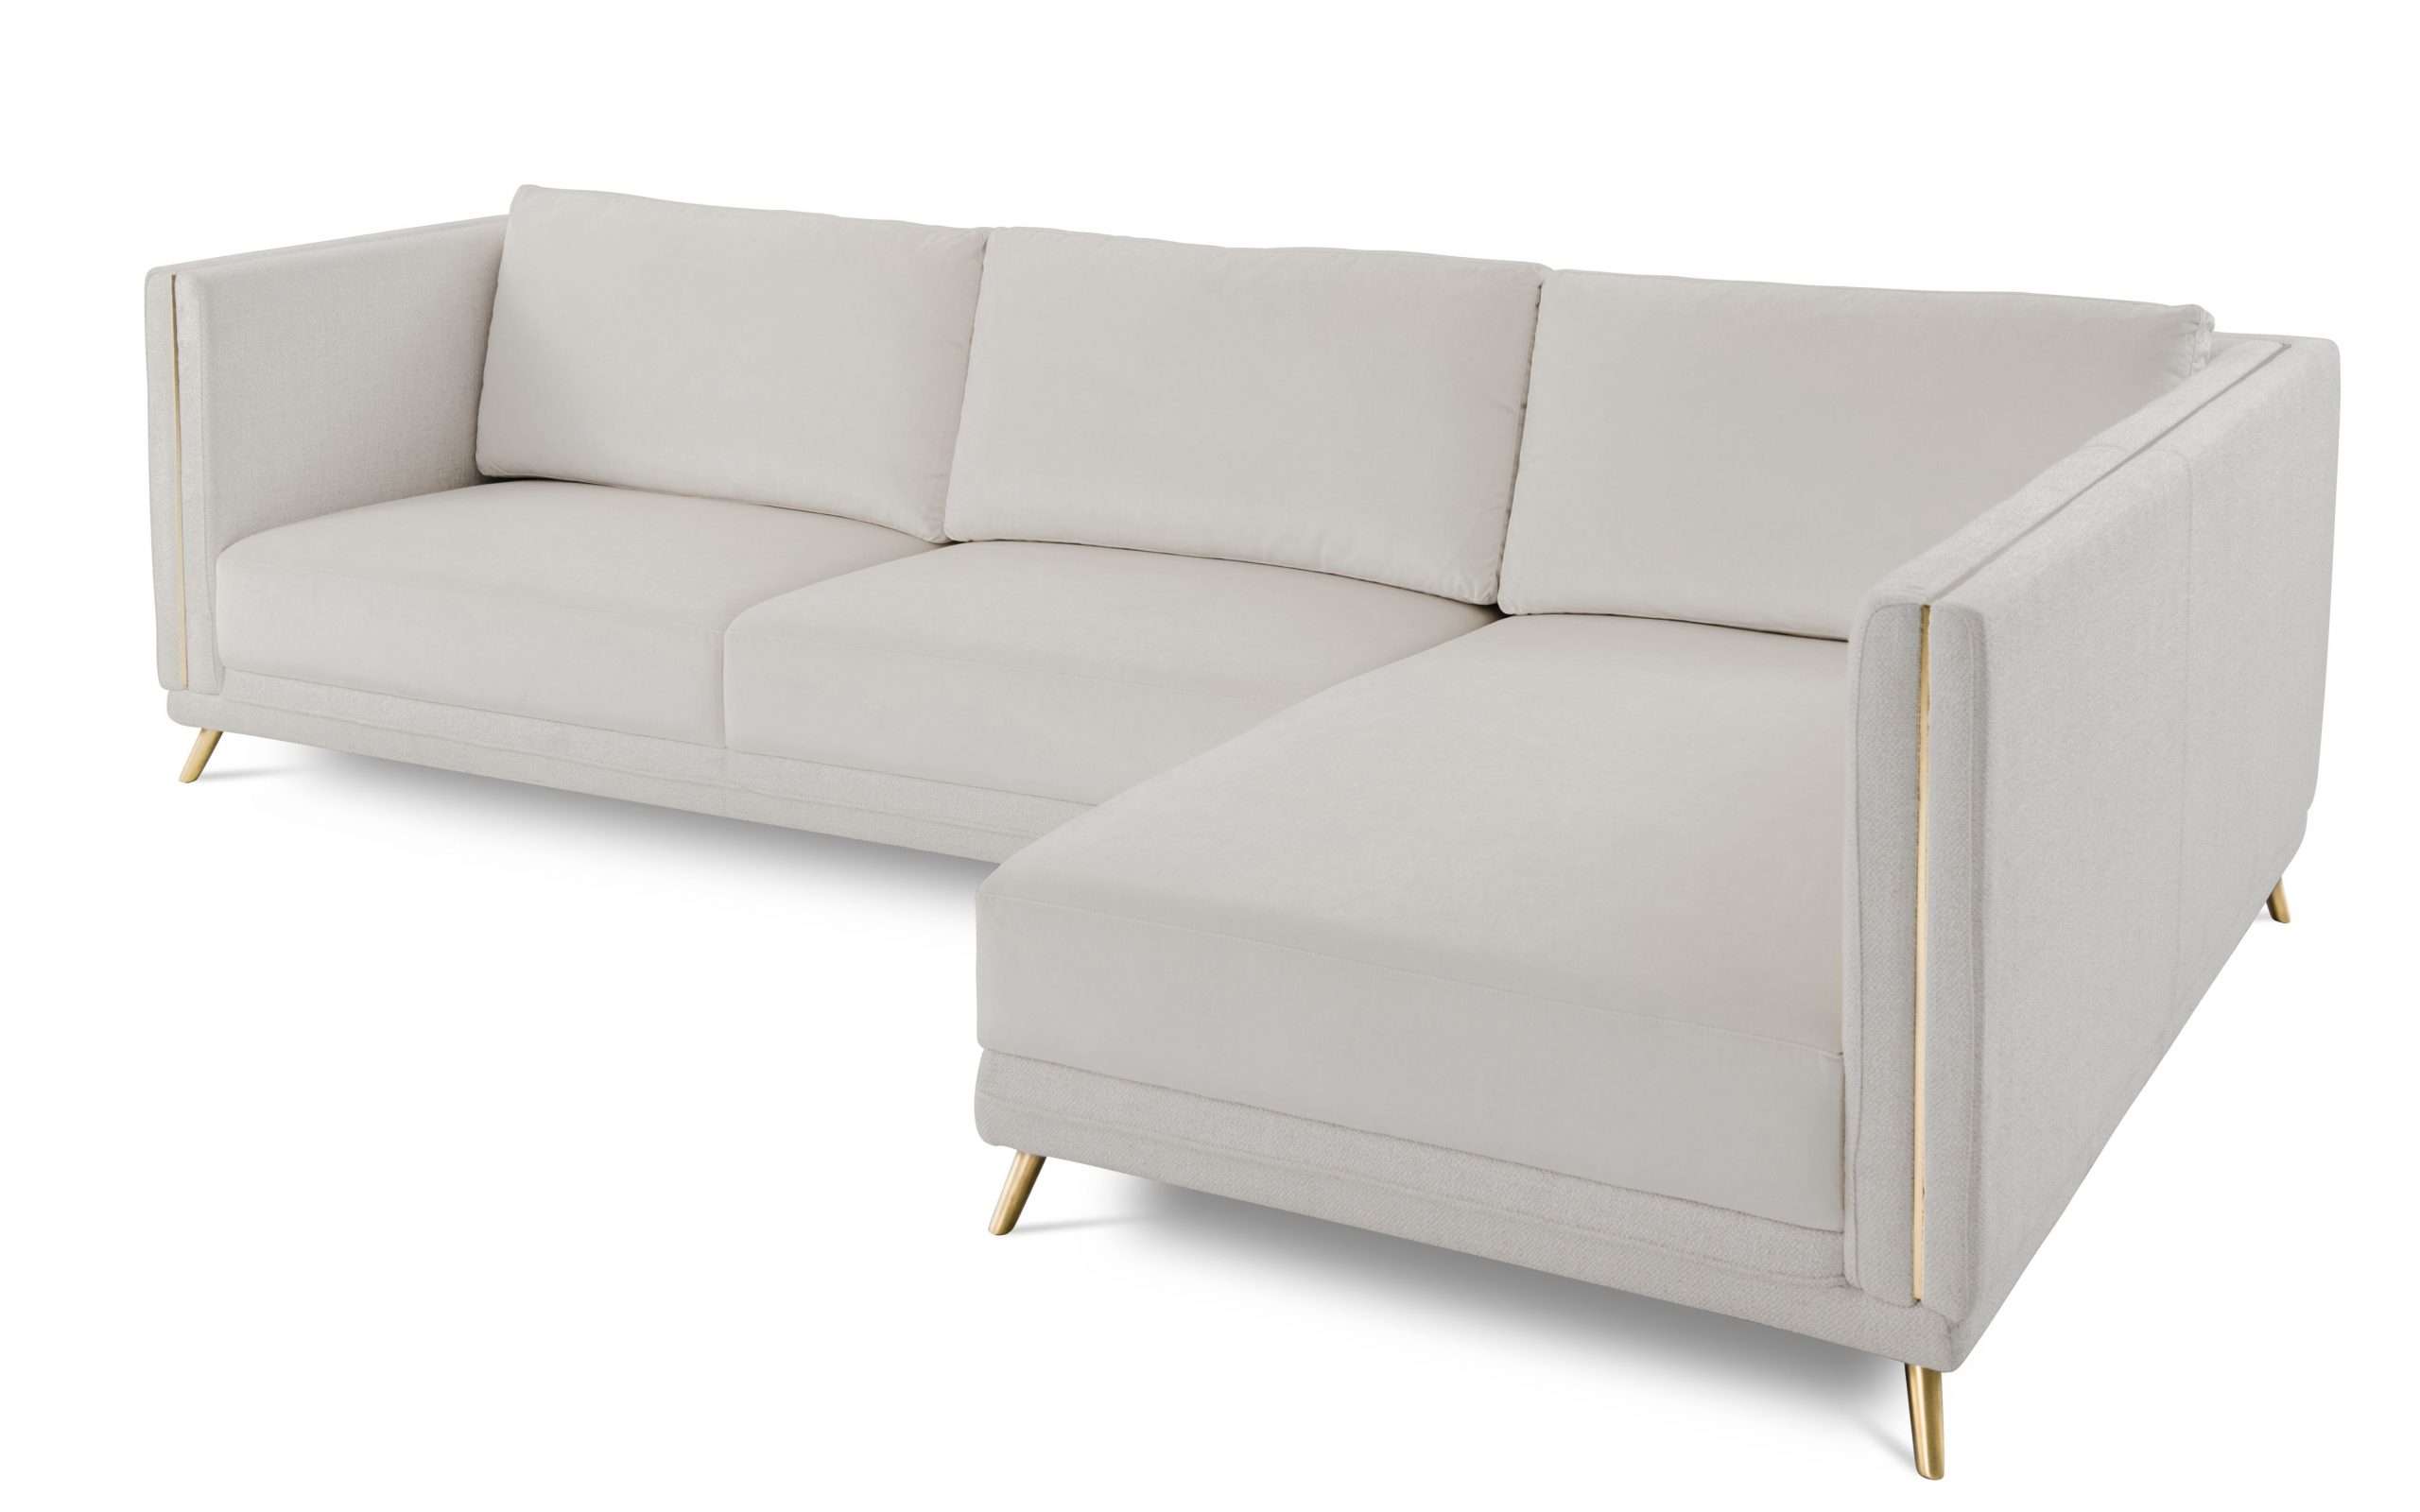 TINOS Sectional Sofa